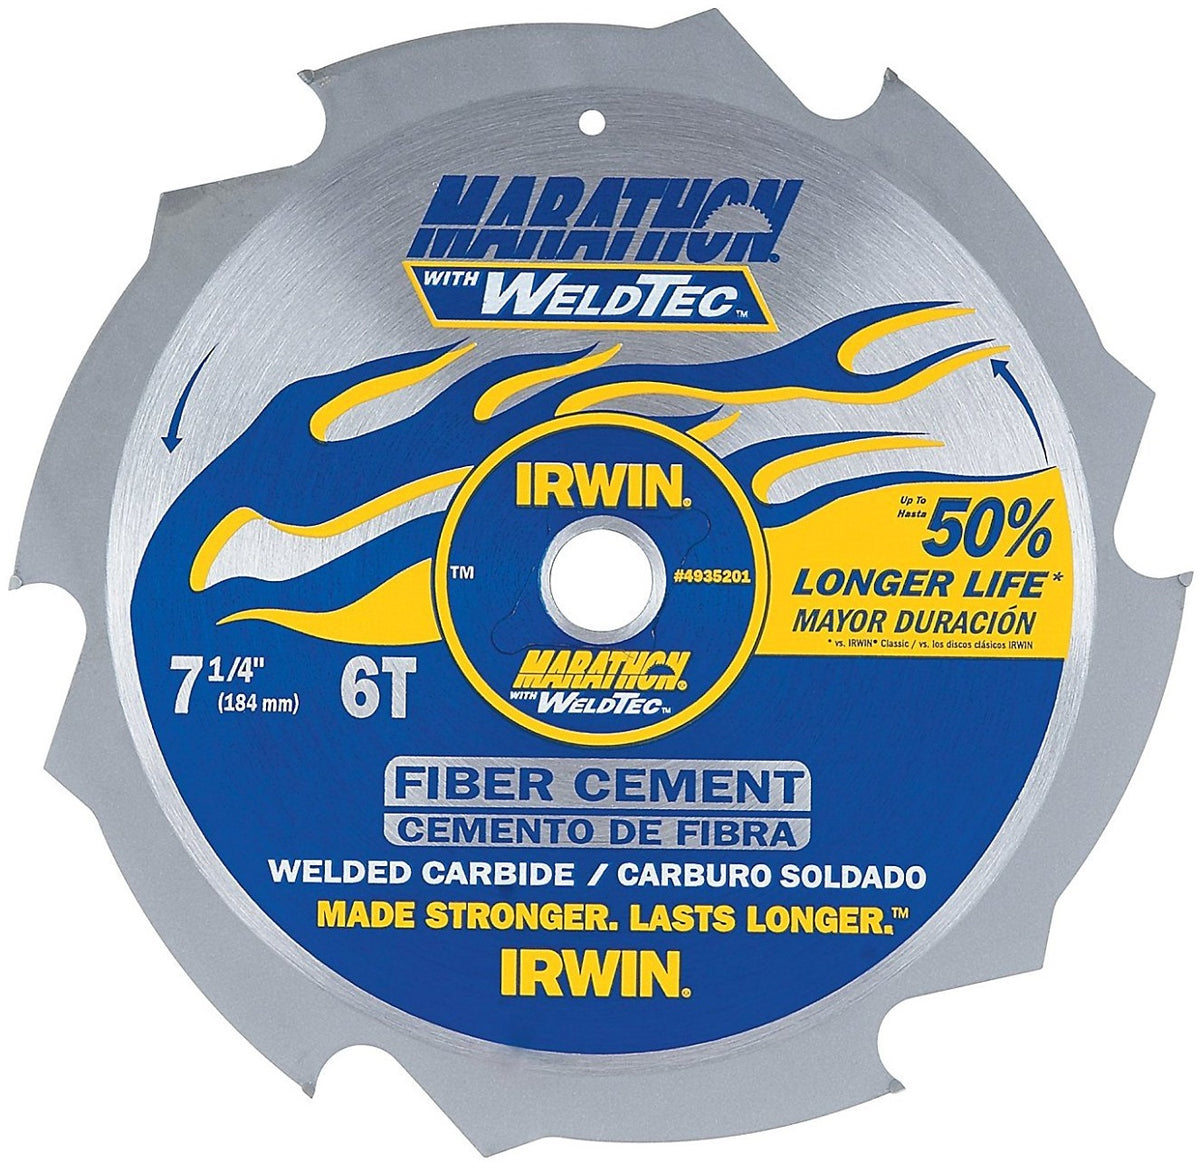 Irwin 4935201 WeldTec Corded Circular Fiber Cement Saw Blade, 7-1/4"